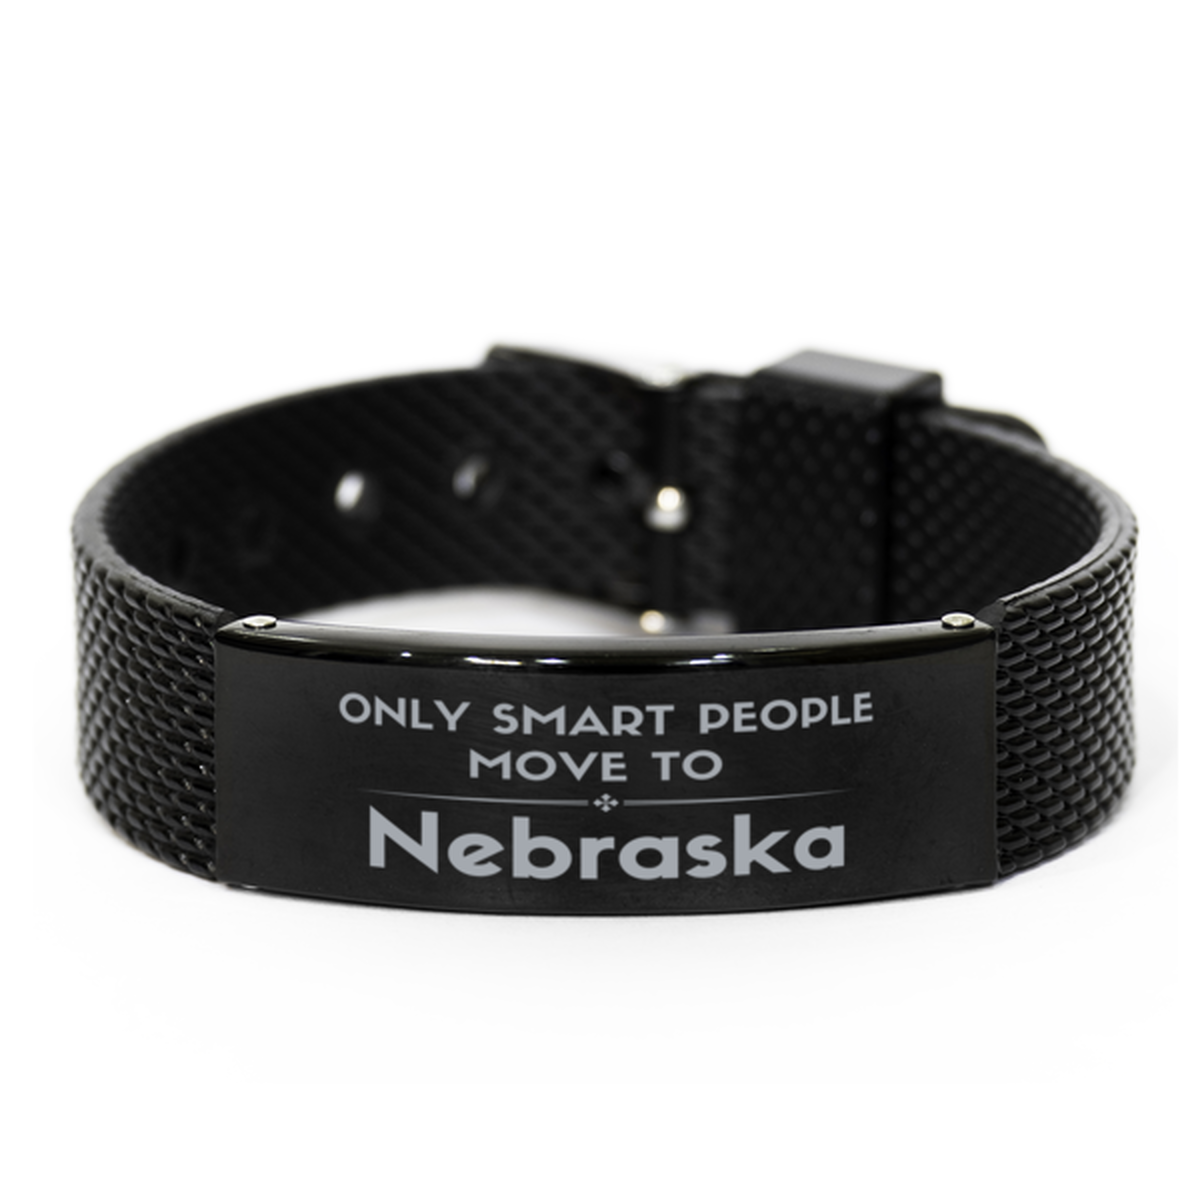 Only smart people move to Nebraska Black Shark Mesh Bracelet, Gag Gifts For Nebraska, Move to Nebraska Gifts for Friends Coworker Funny Saying Quote